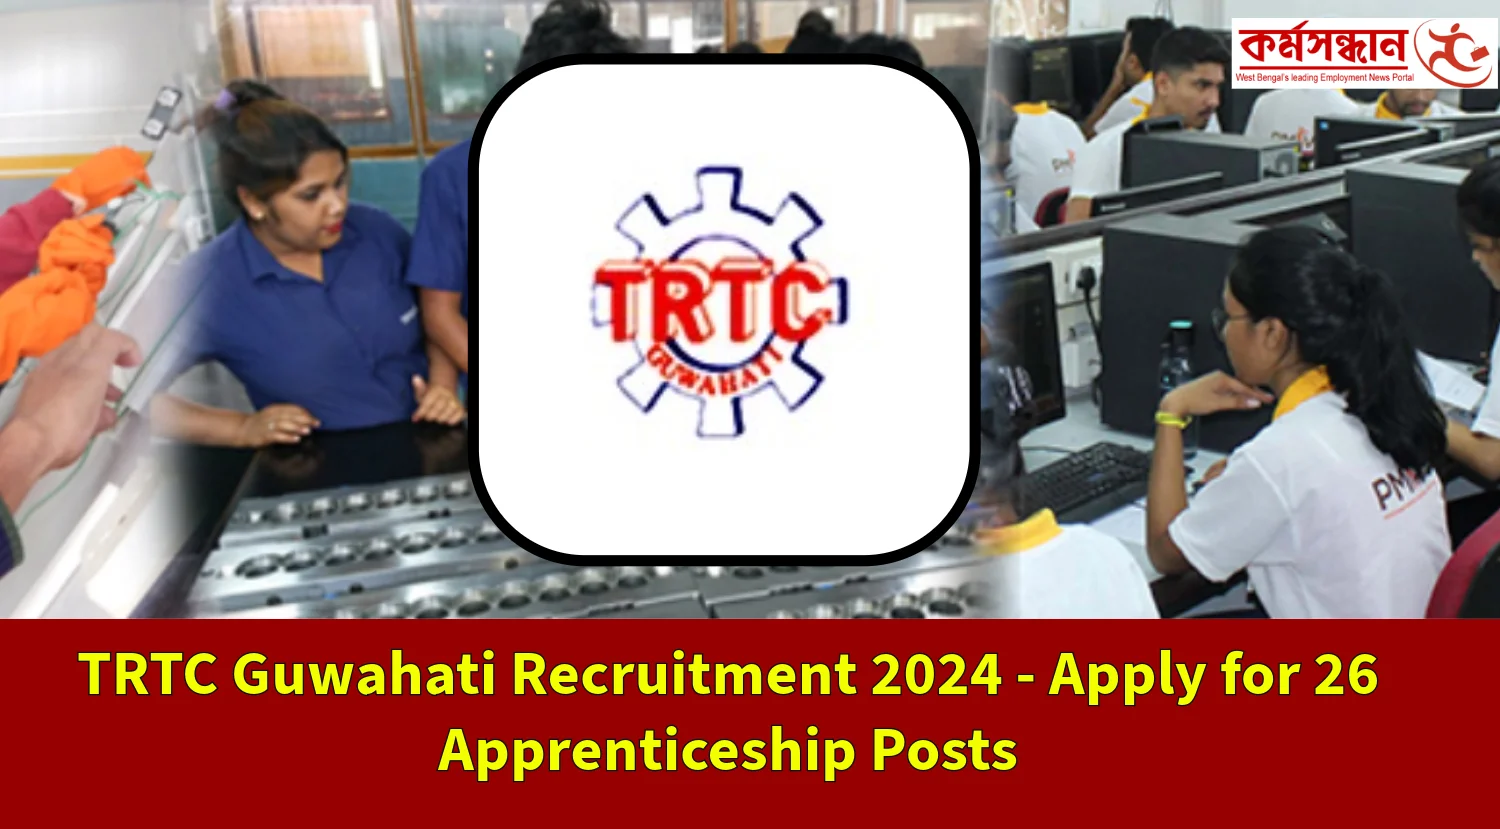 TRTC Guwahati Recruitment 2024 - Apply for 26 Apprenticeship Posts